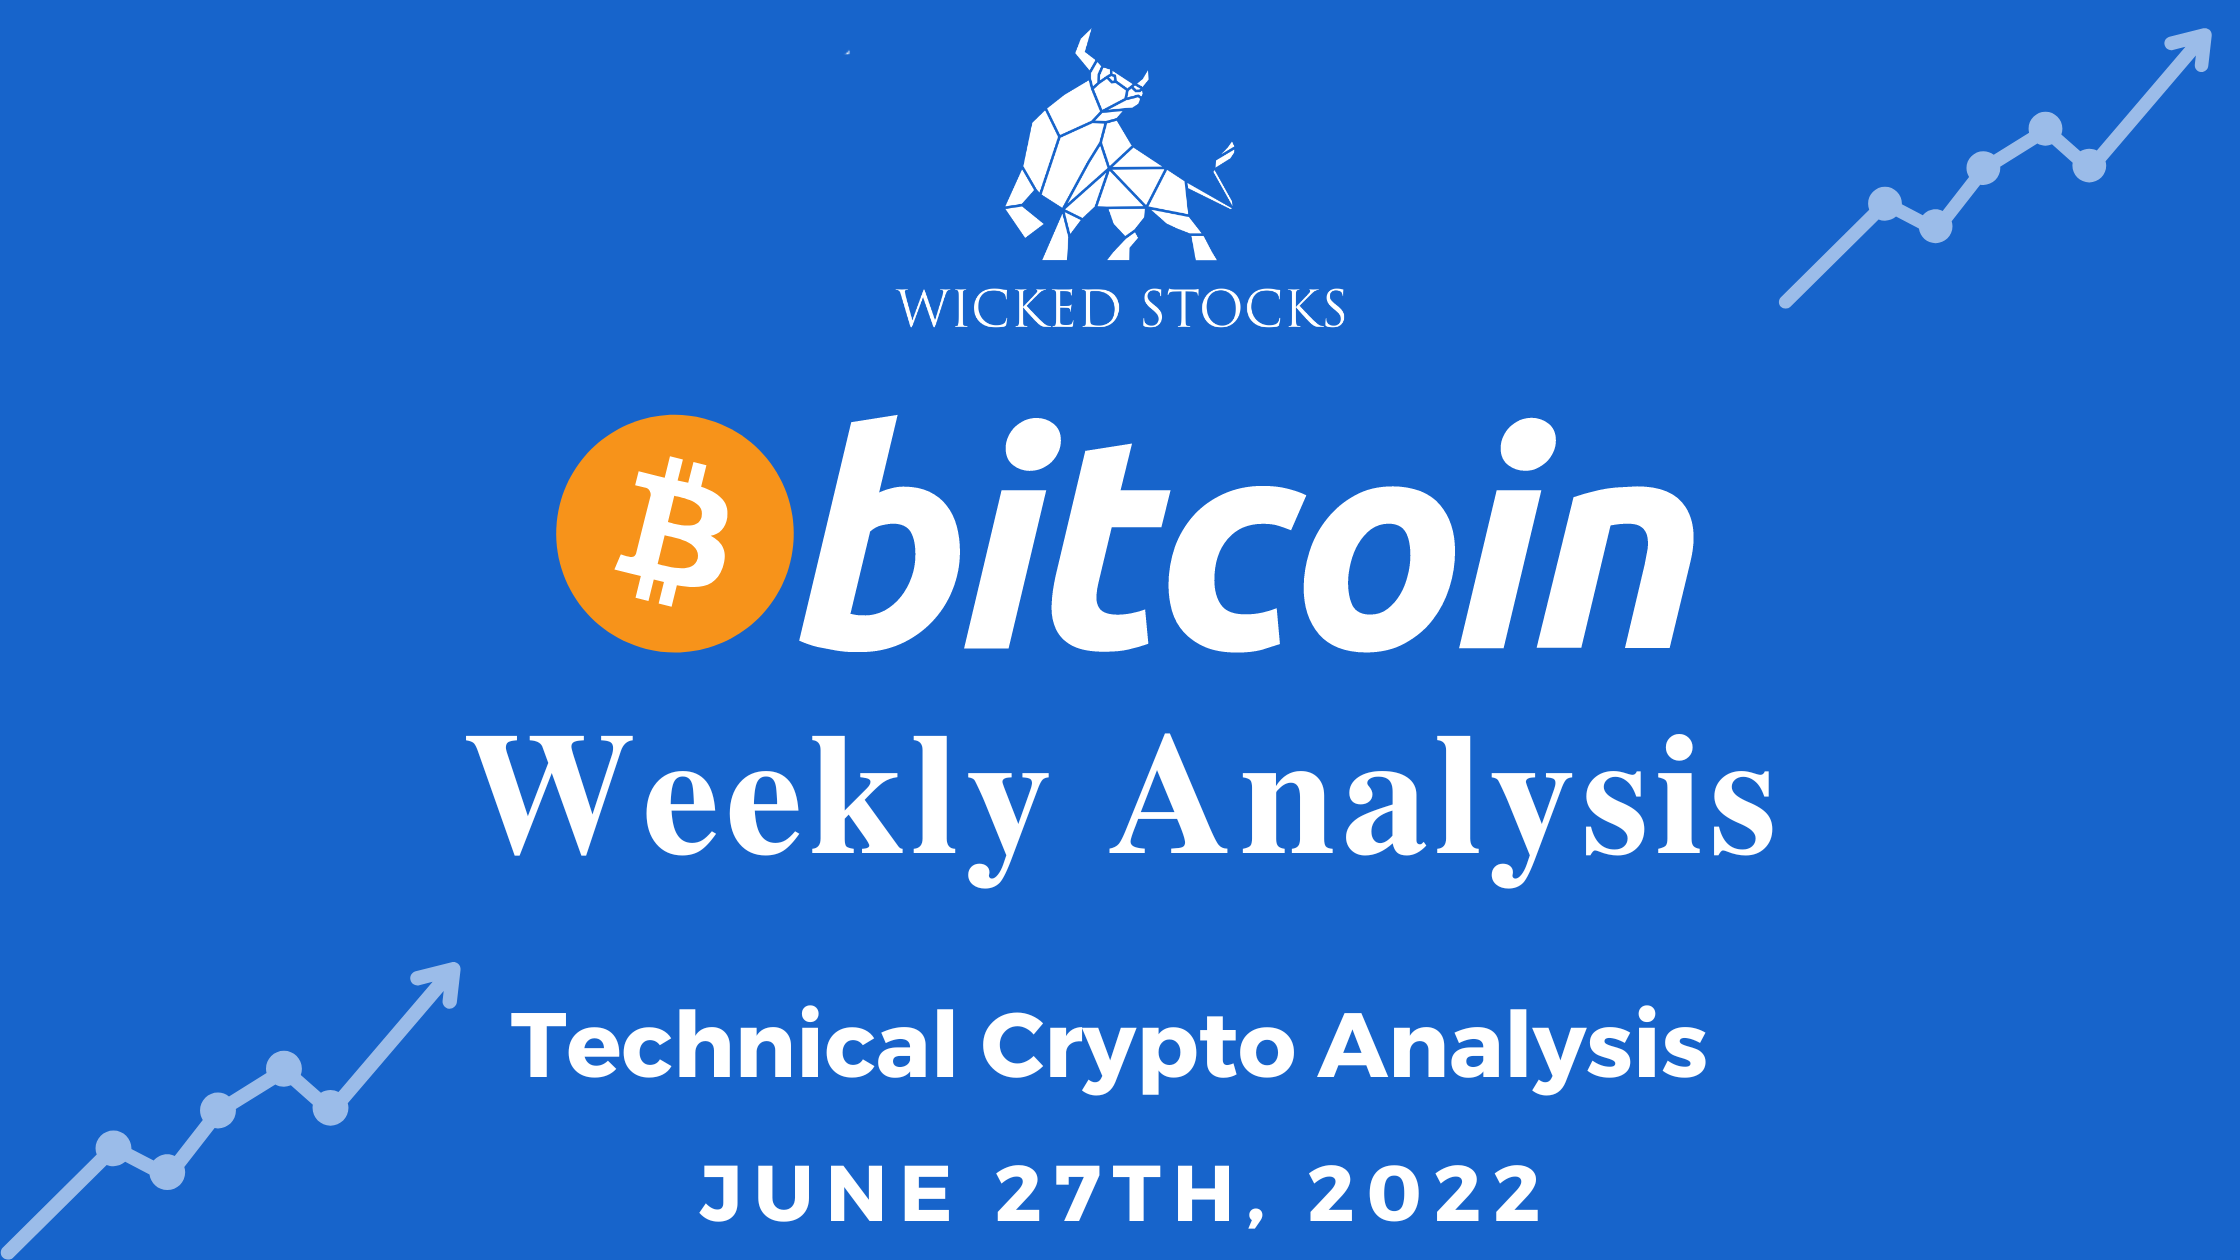 Bitcoin (BTC) Weekly Analysis 6/27/22